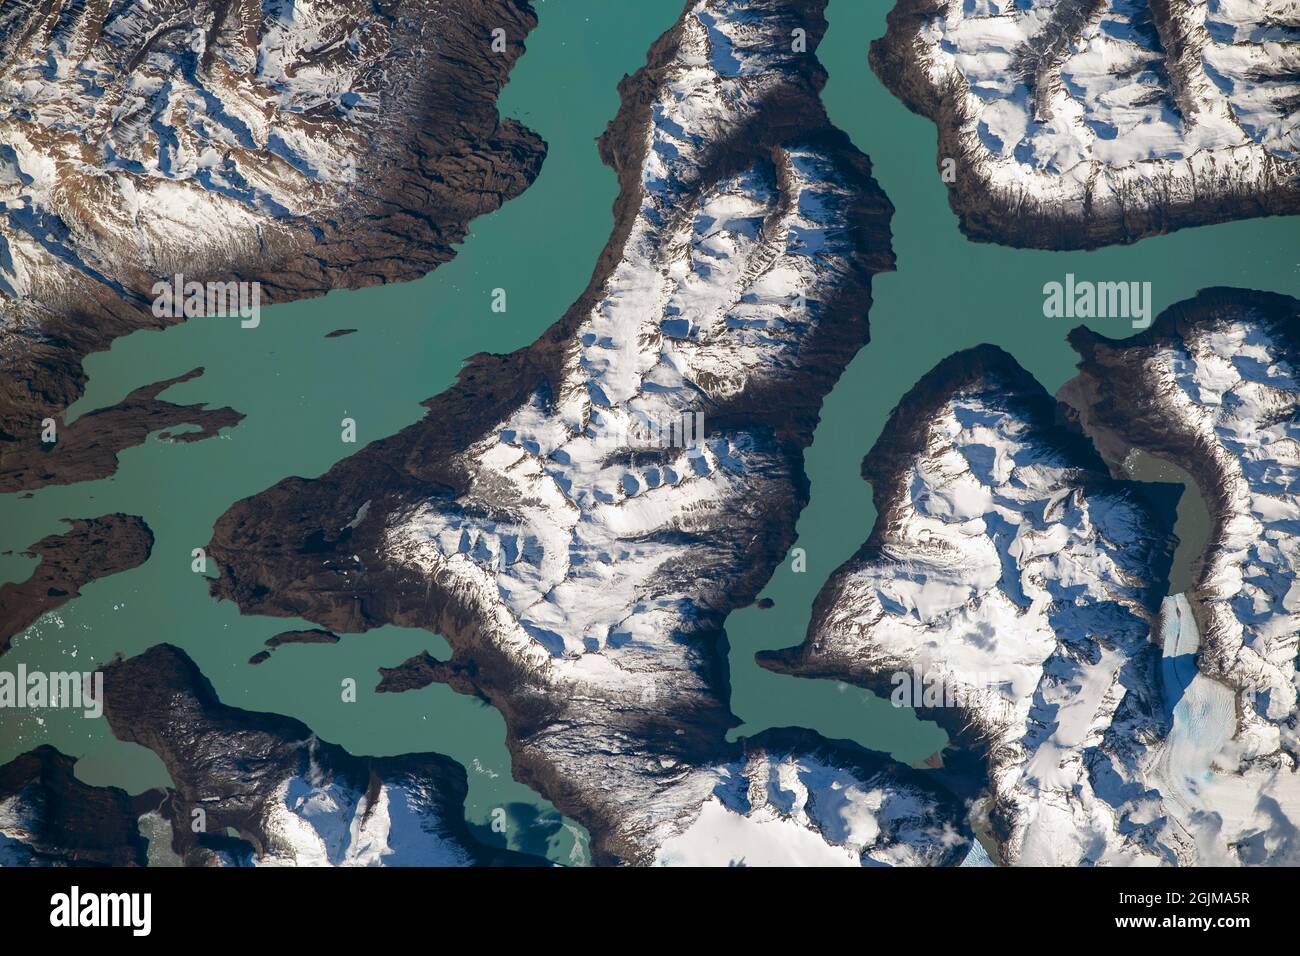 AMEGHINO GLACIER, Patagonia, Argentina. Photographed in 2019.  An optimised and digitally enhanced version of a NASA image / credit NASA Stock Photo